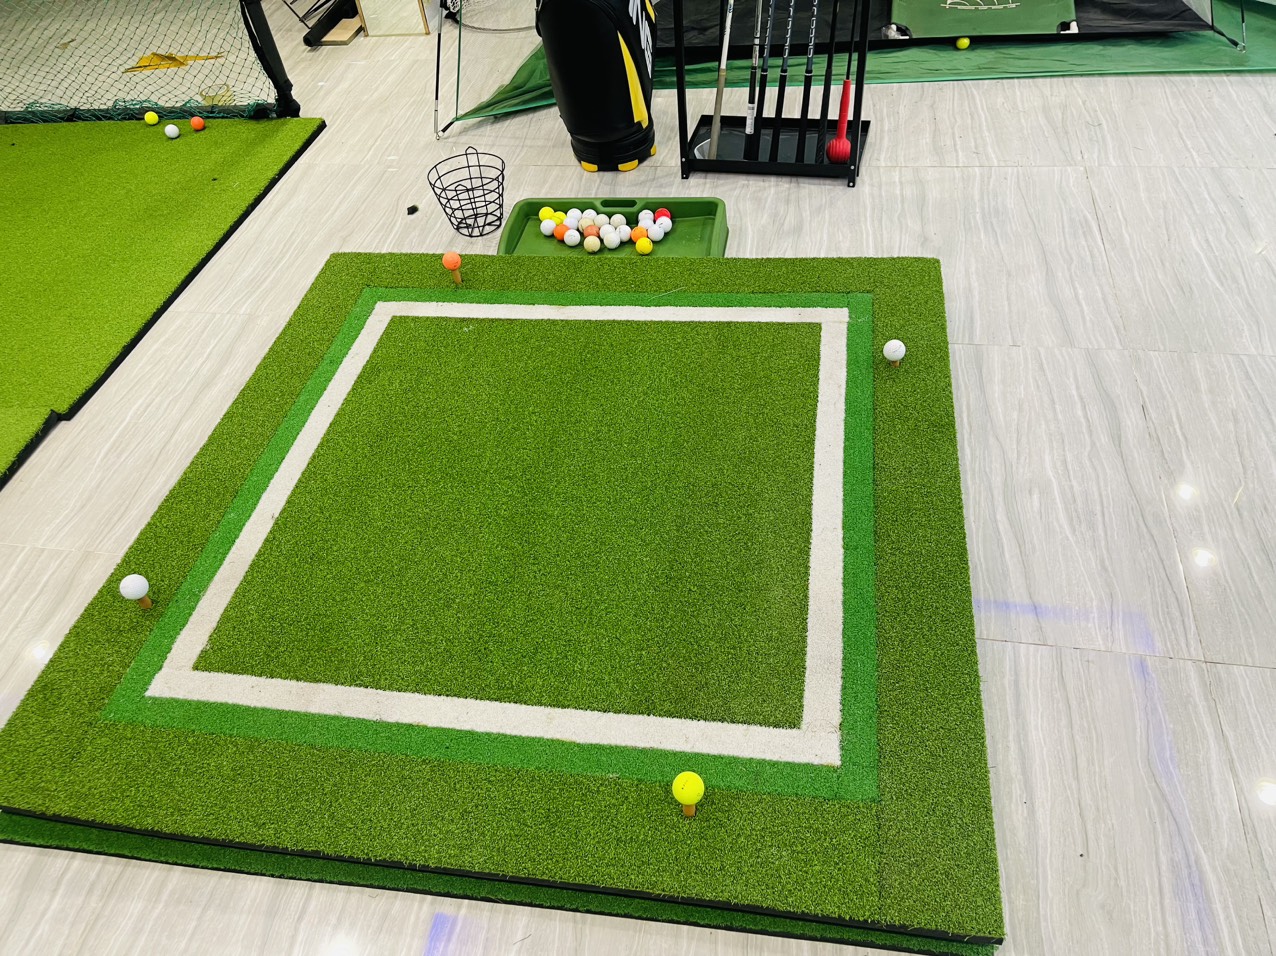 Thảm tập golf 2D mẫu mới kèm 2 tee